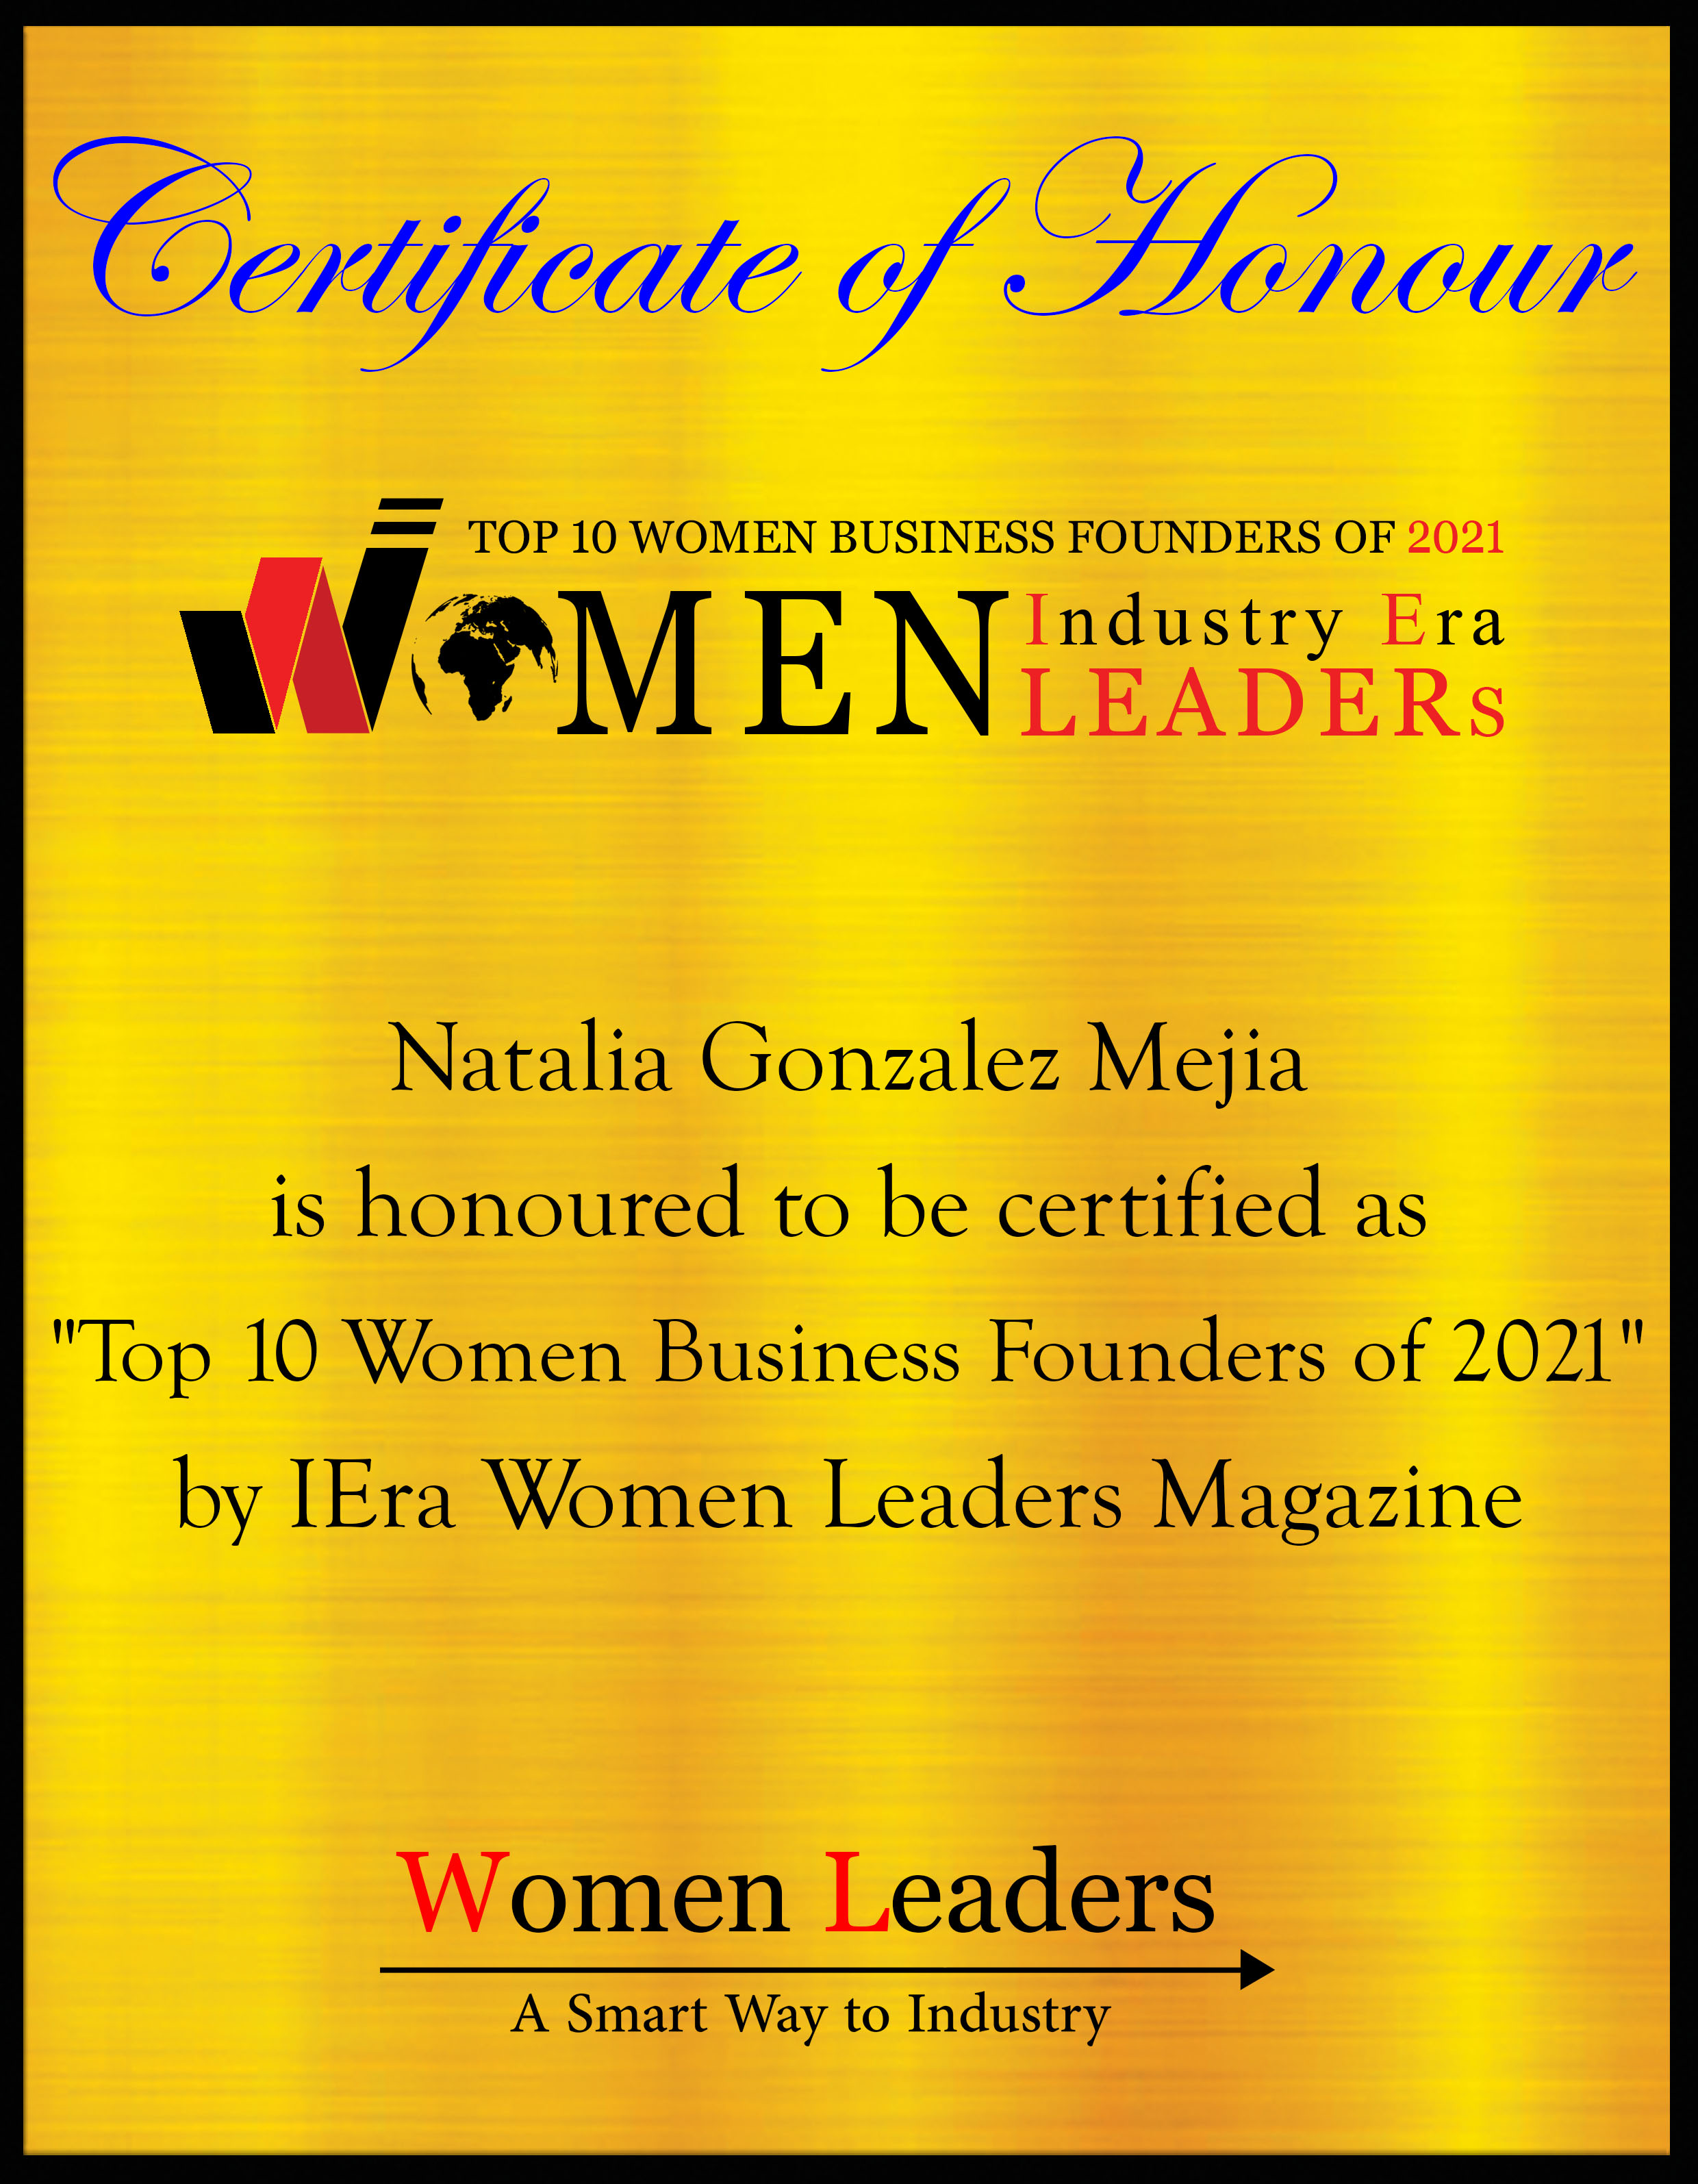 Natalia Gonzalez Mejia,Founder of Dharma Creativ Agency, Top Women Business Founders of 2021